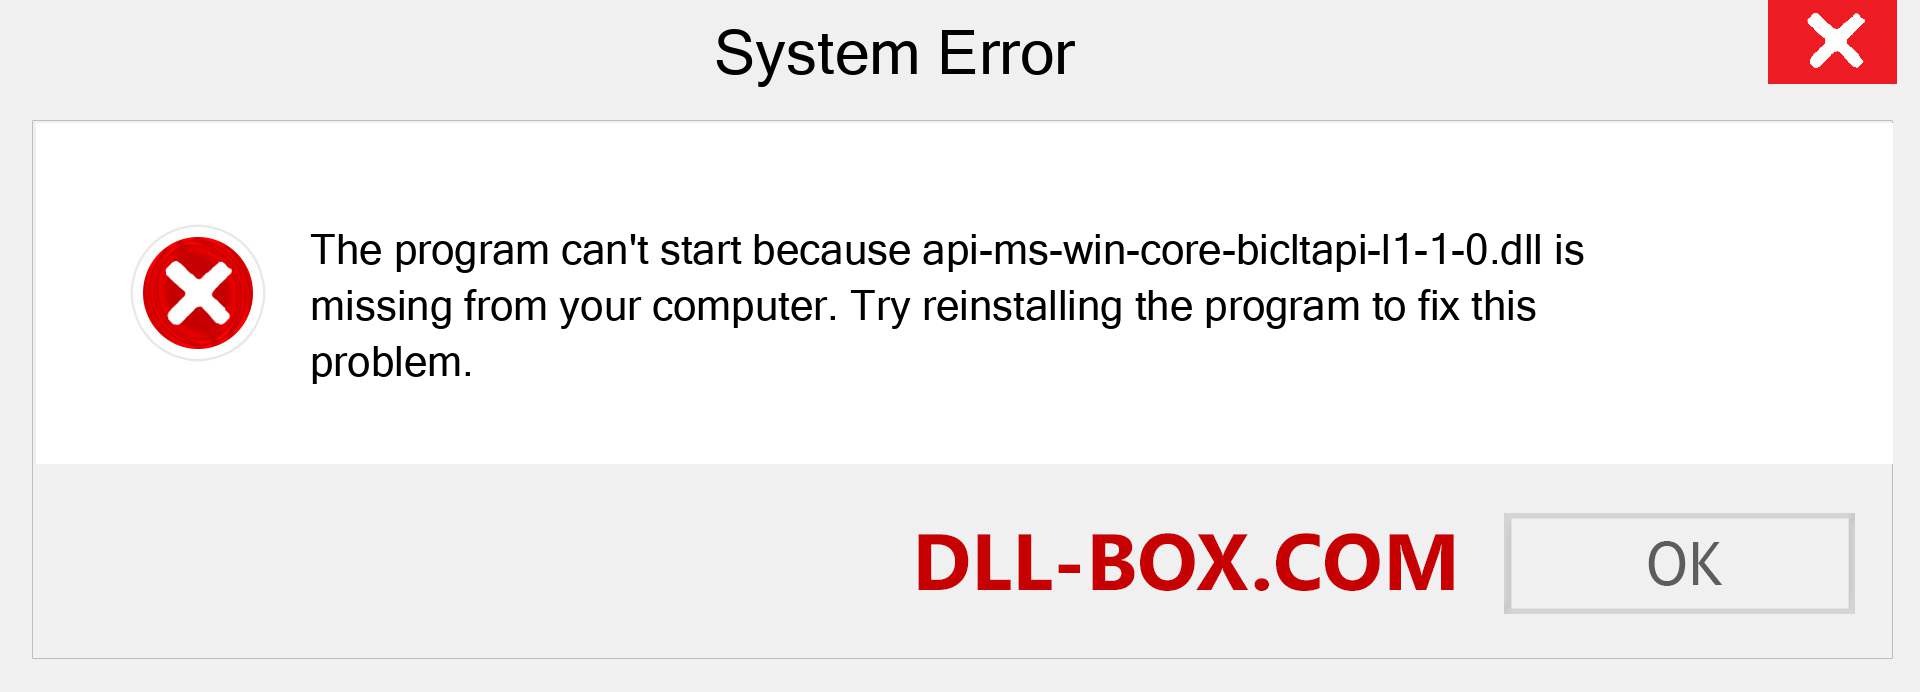  api-ms-win-core-bicltapi-l1-1-0.dll file is missing?. Download for Windows 7, 8, 10 - Fix  api-ms-win-core-bicltapi-l1-1-0 dll Missing Error on Windows, photos, images